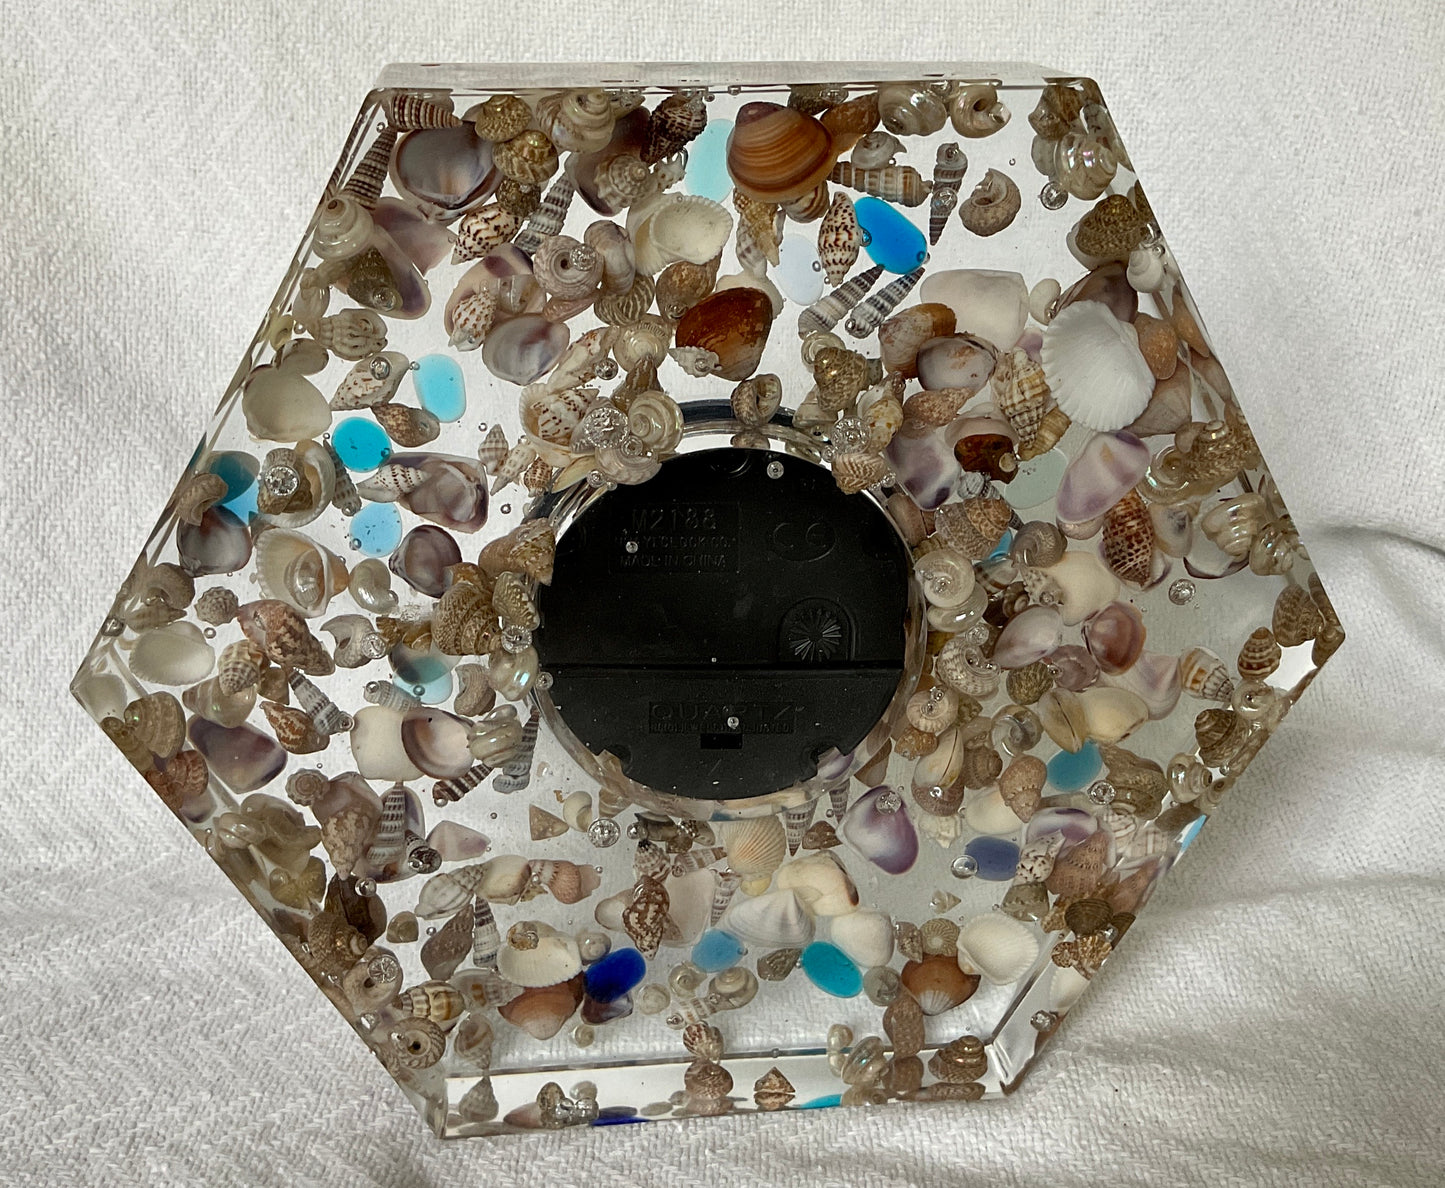 Sea shells and sea glass clear resin hexagonal clock